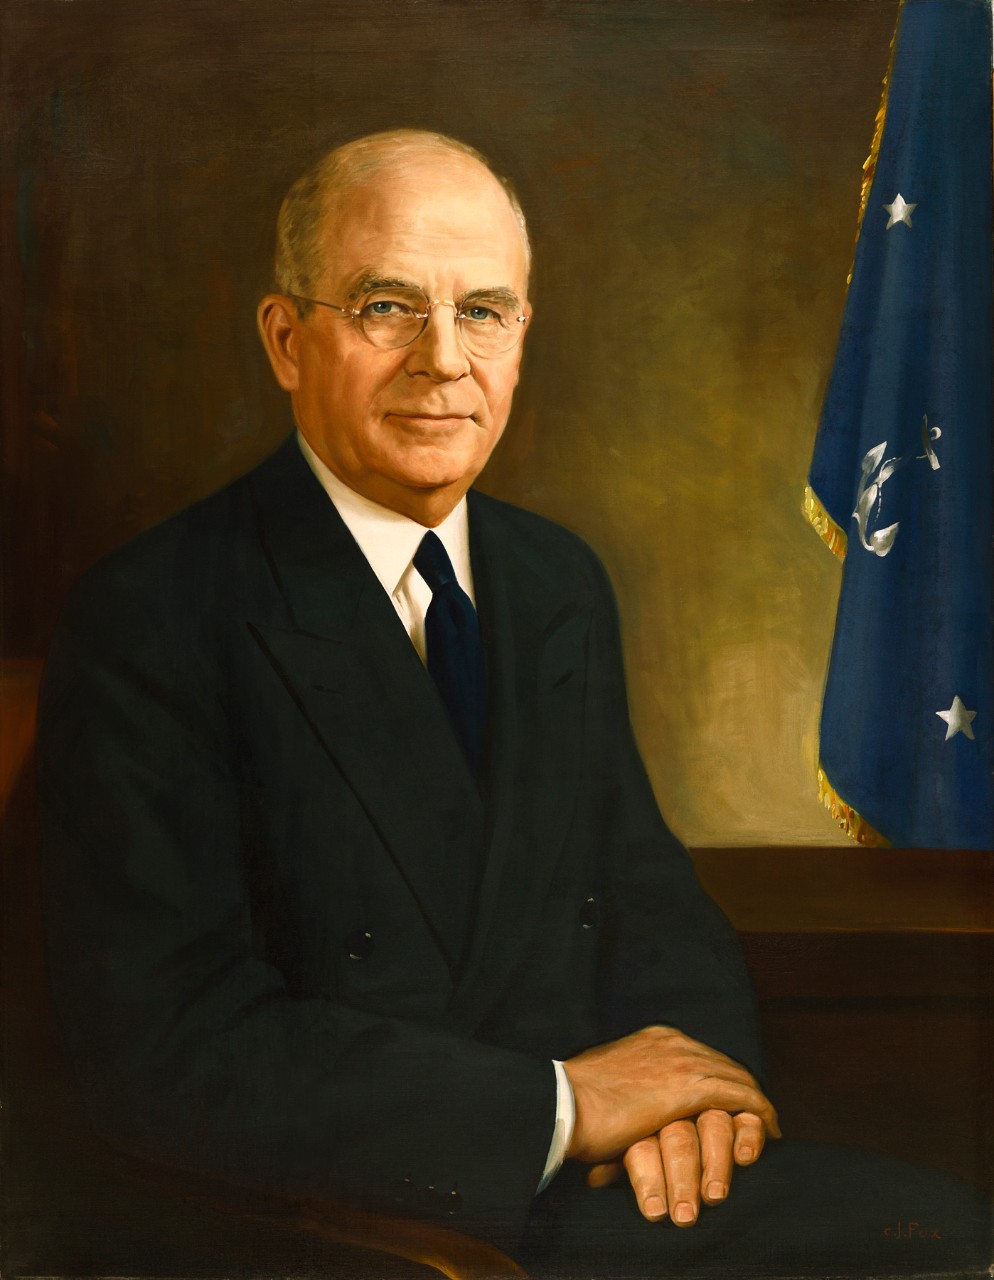 Portrait of Secretary of the Navy Francis Patrick Matthews